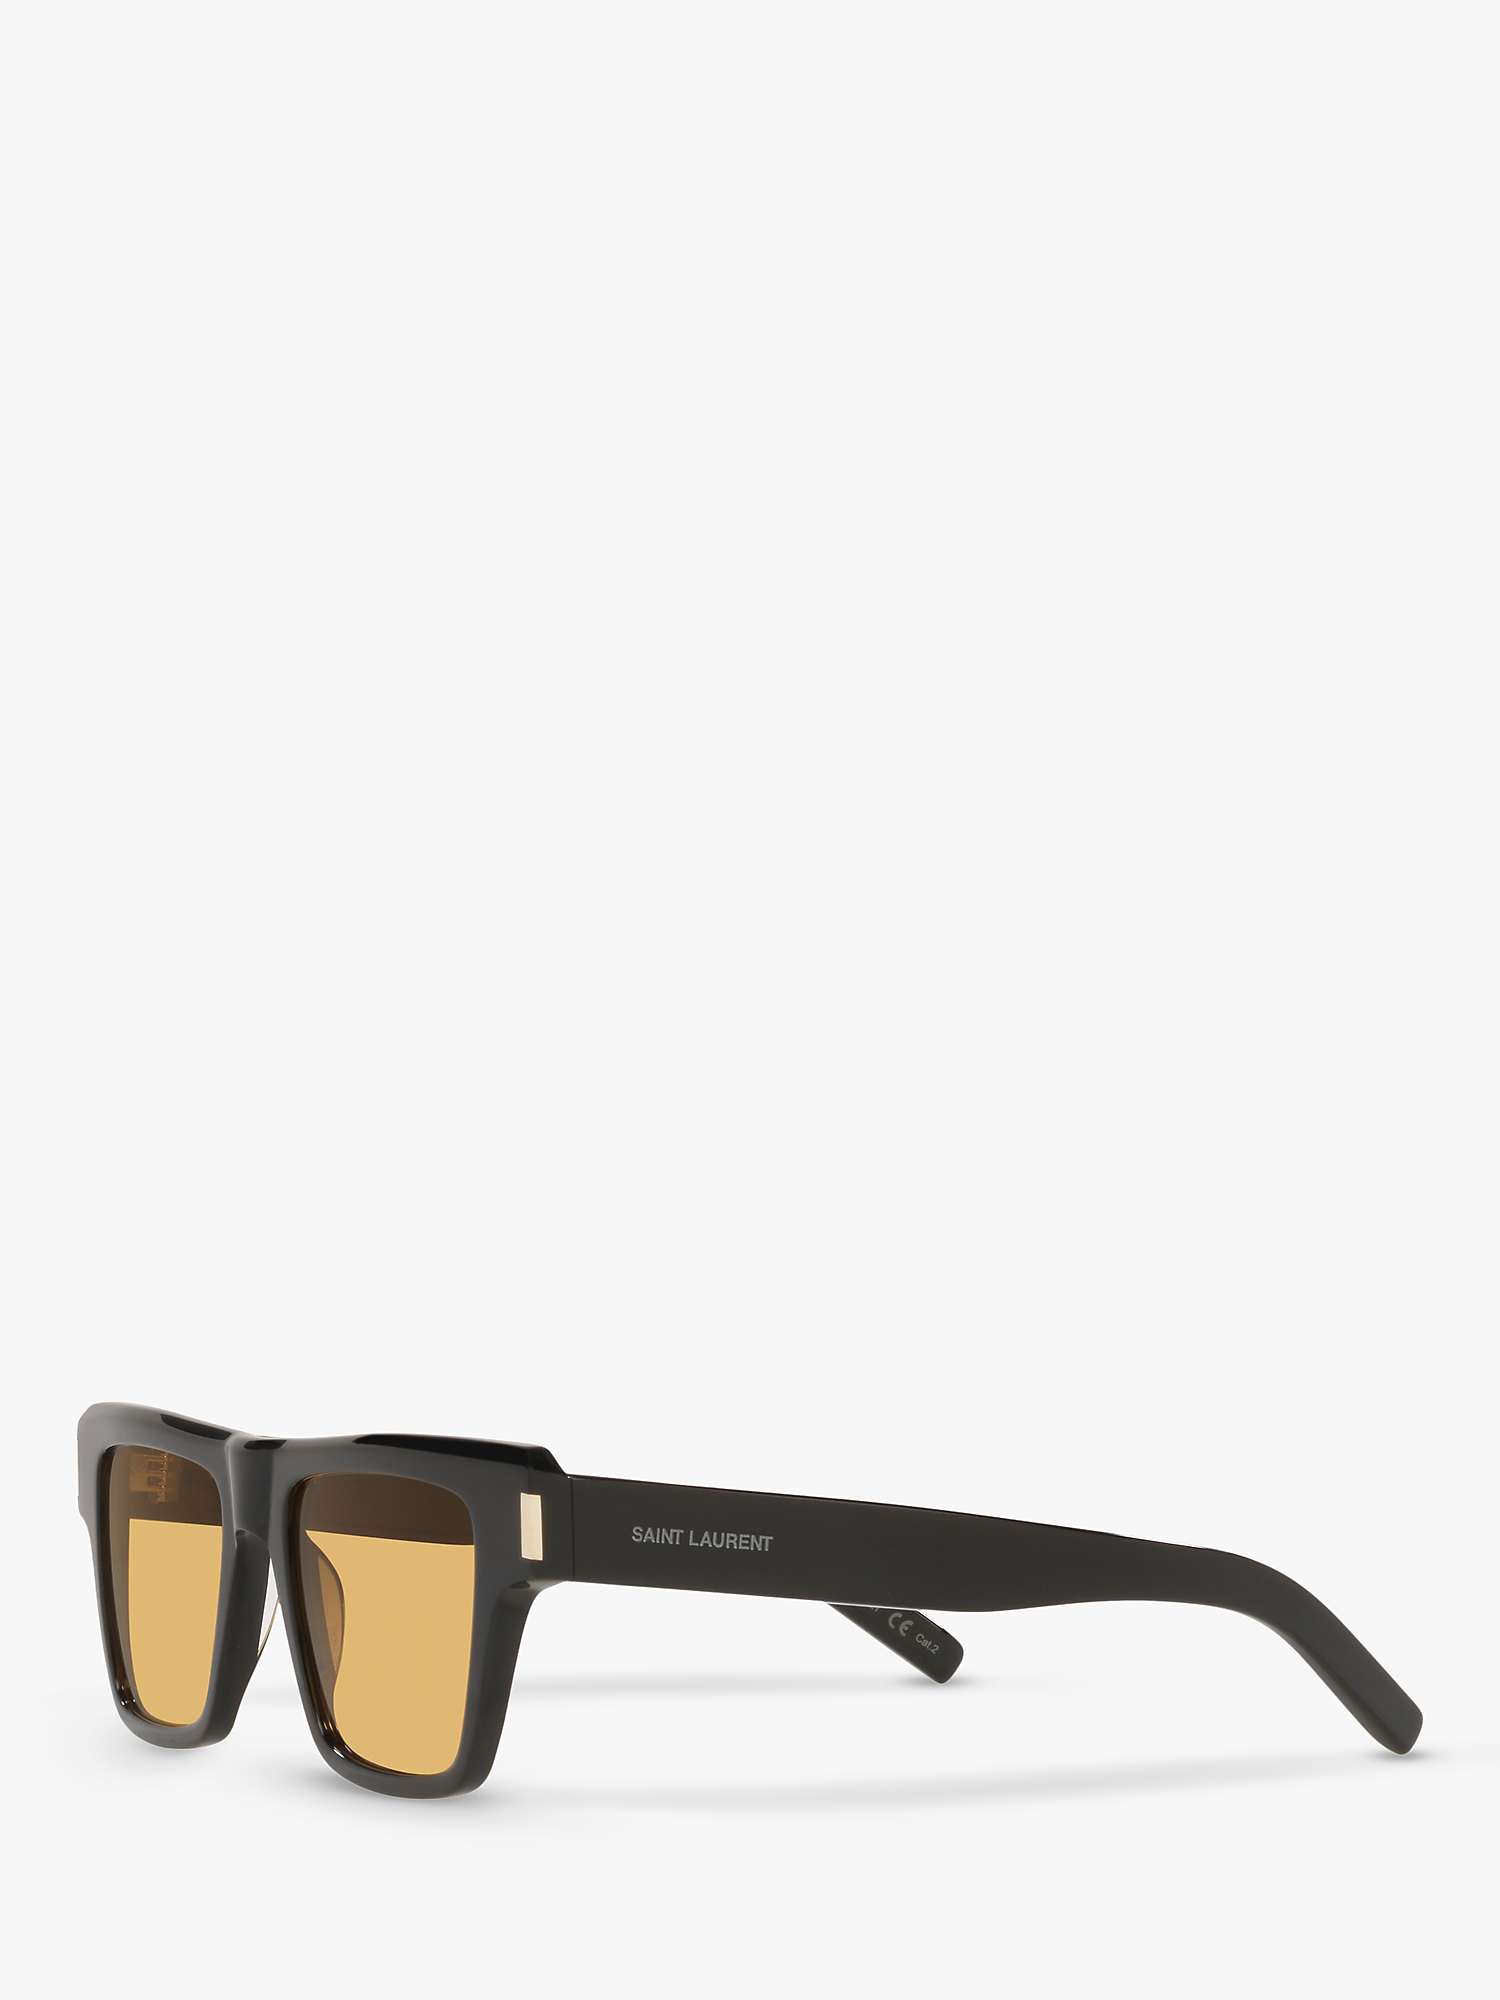 Buy Yves Saint Laurent SL 469 Men's Rectangular Sunglasses, Shiny Black/Yellow Online at johnlewis.com